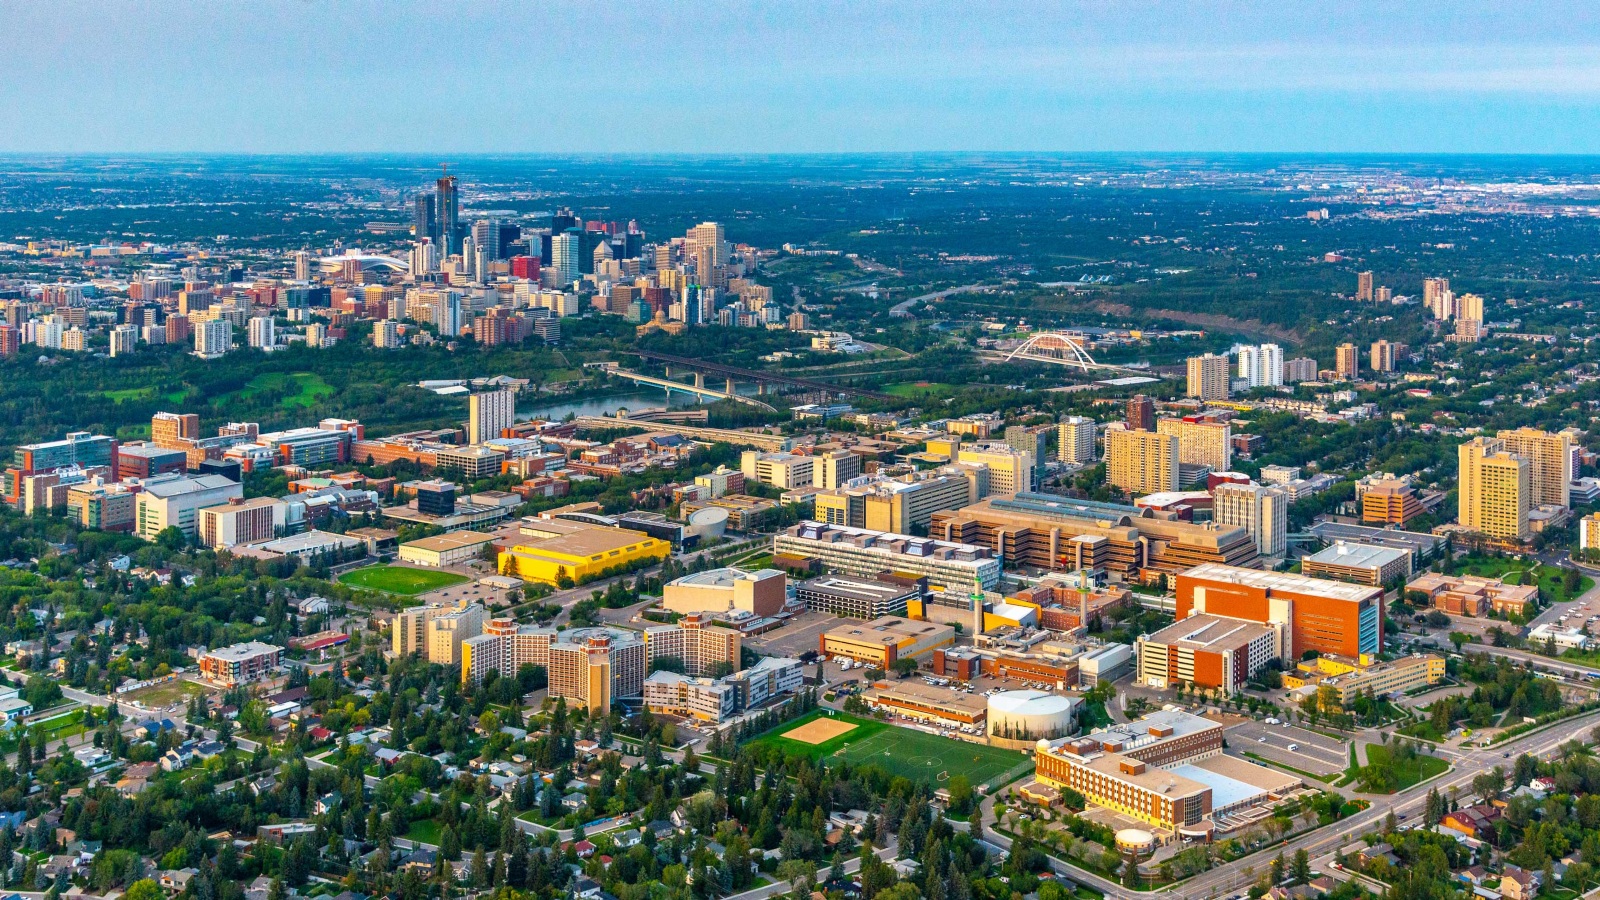 Aerial photo of the University of Alberta's North Campus